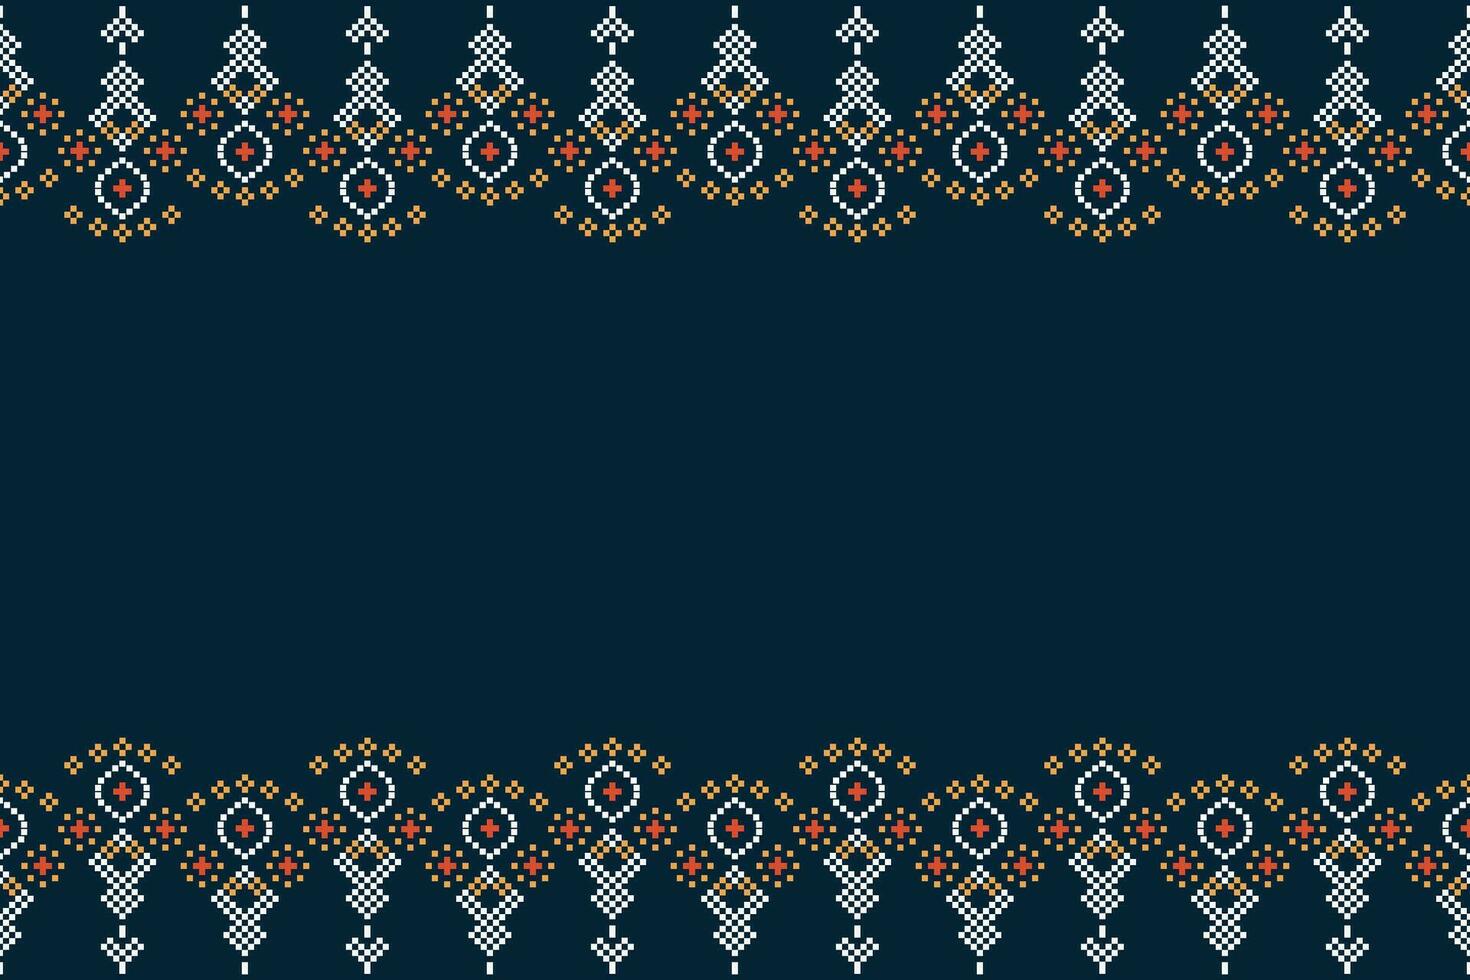 étnico geométrico tela modelo cruzar puntada.ikat bordado étnico oriental píxel modelo azul antecedentes. resumen, vector, ilustración. textura,ropa,marco,decoración,motivos,seda fondo de pantalla. vector